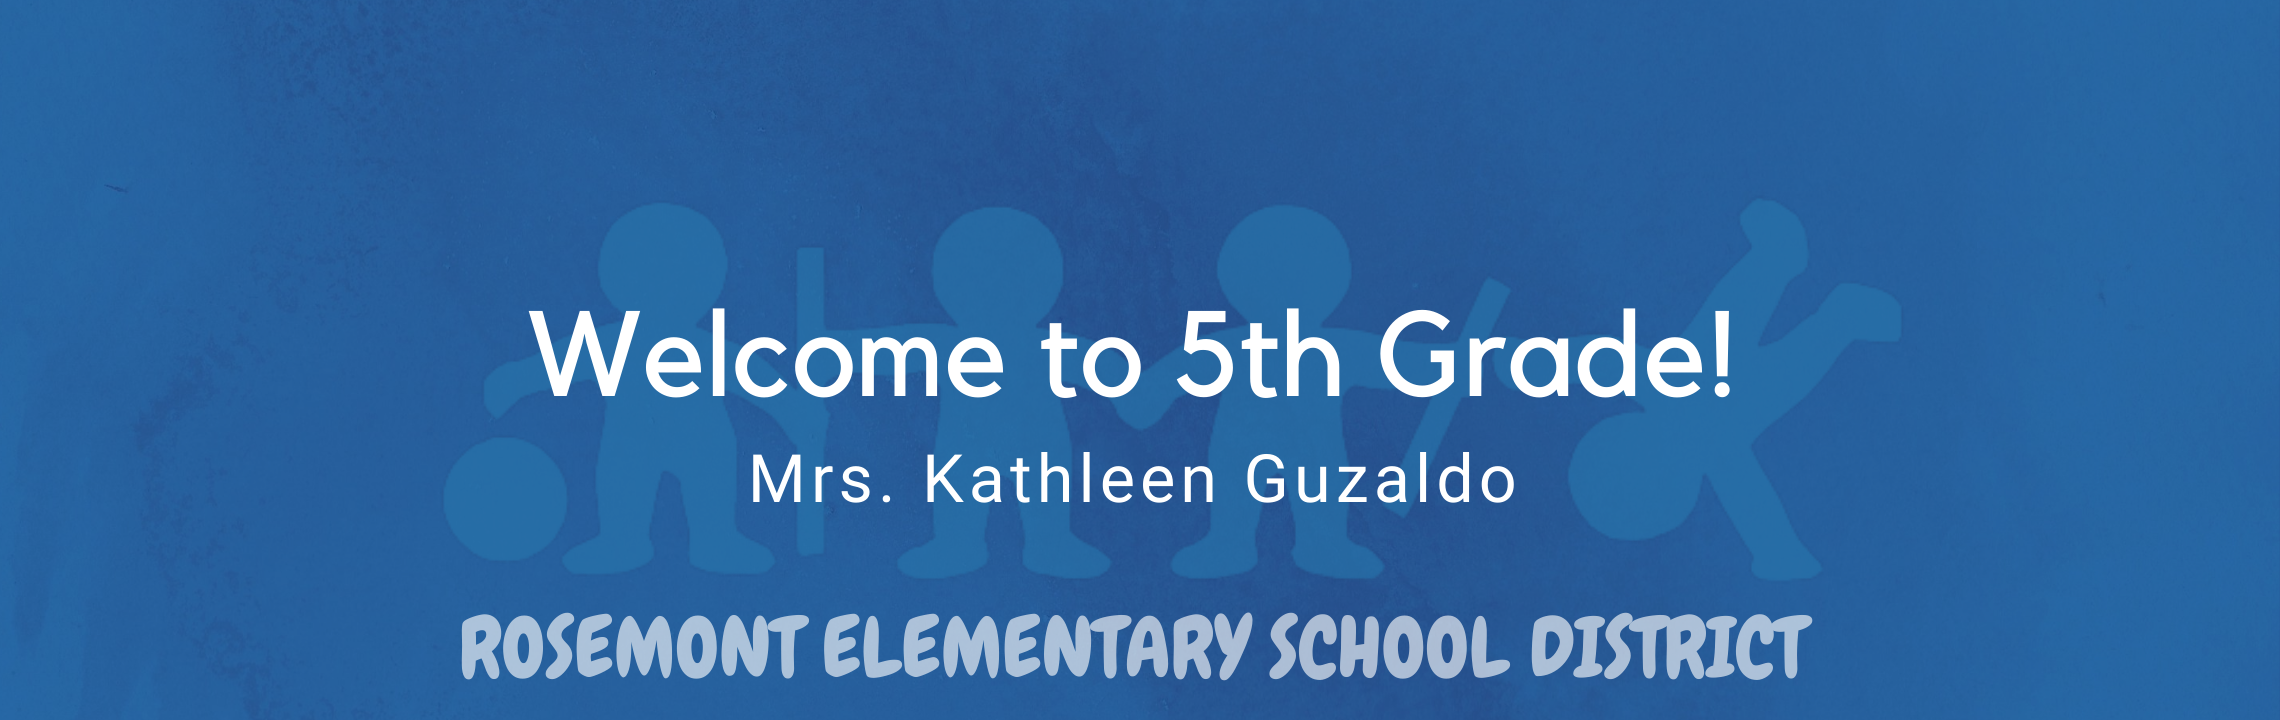 Welcome to 5th Grade, Mrs. Kathleen Guzaldo, Rosemont Elementary Schools 